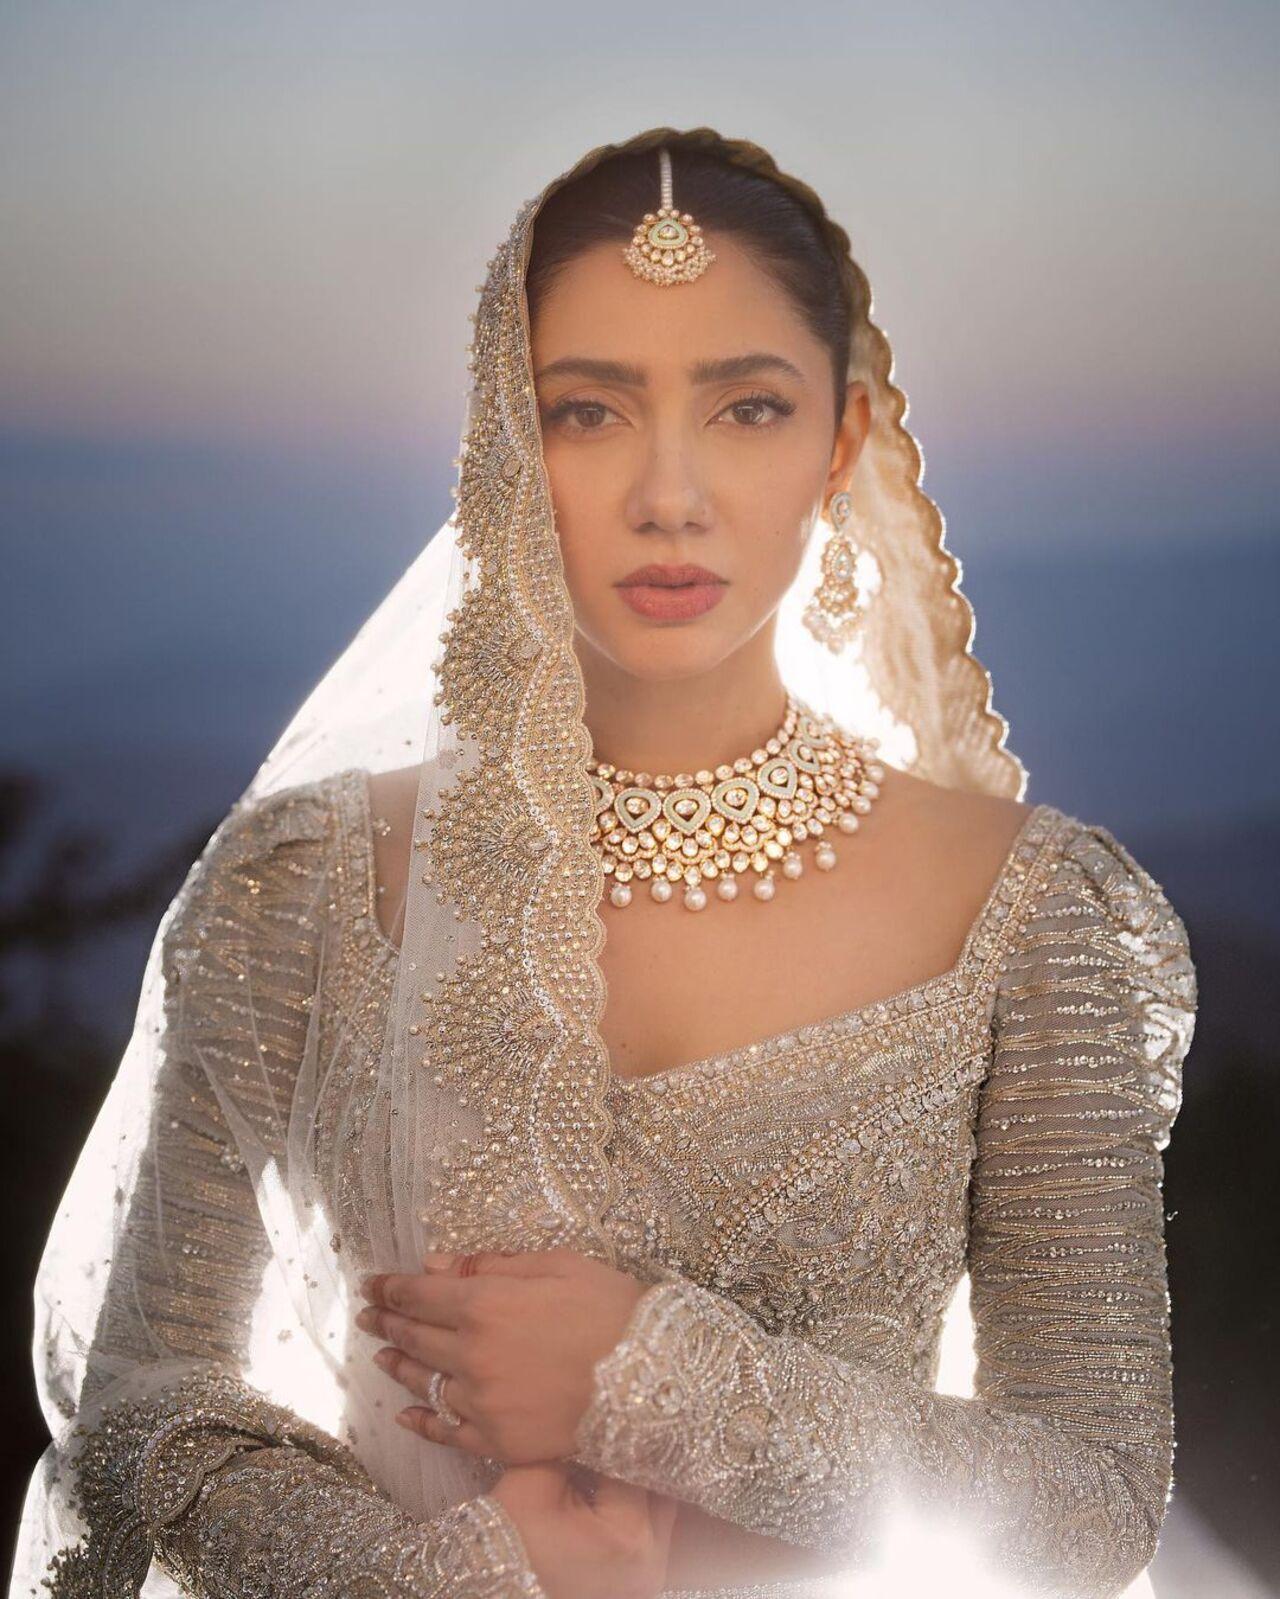 Mahira Khan got married to her longtime boyfriend Salim Karim in an intimate wedding on October 1